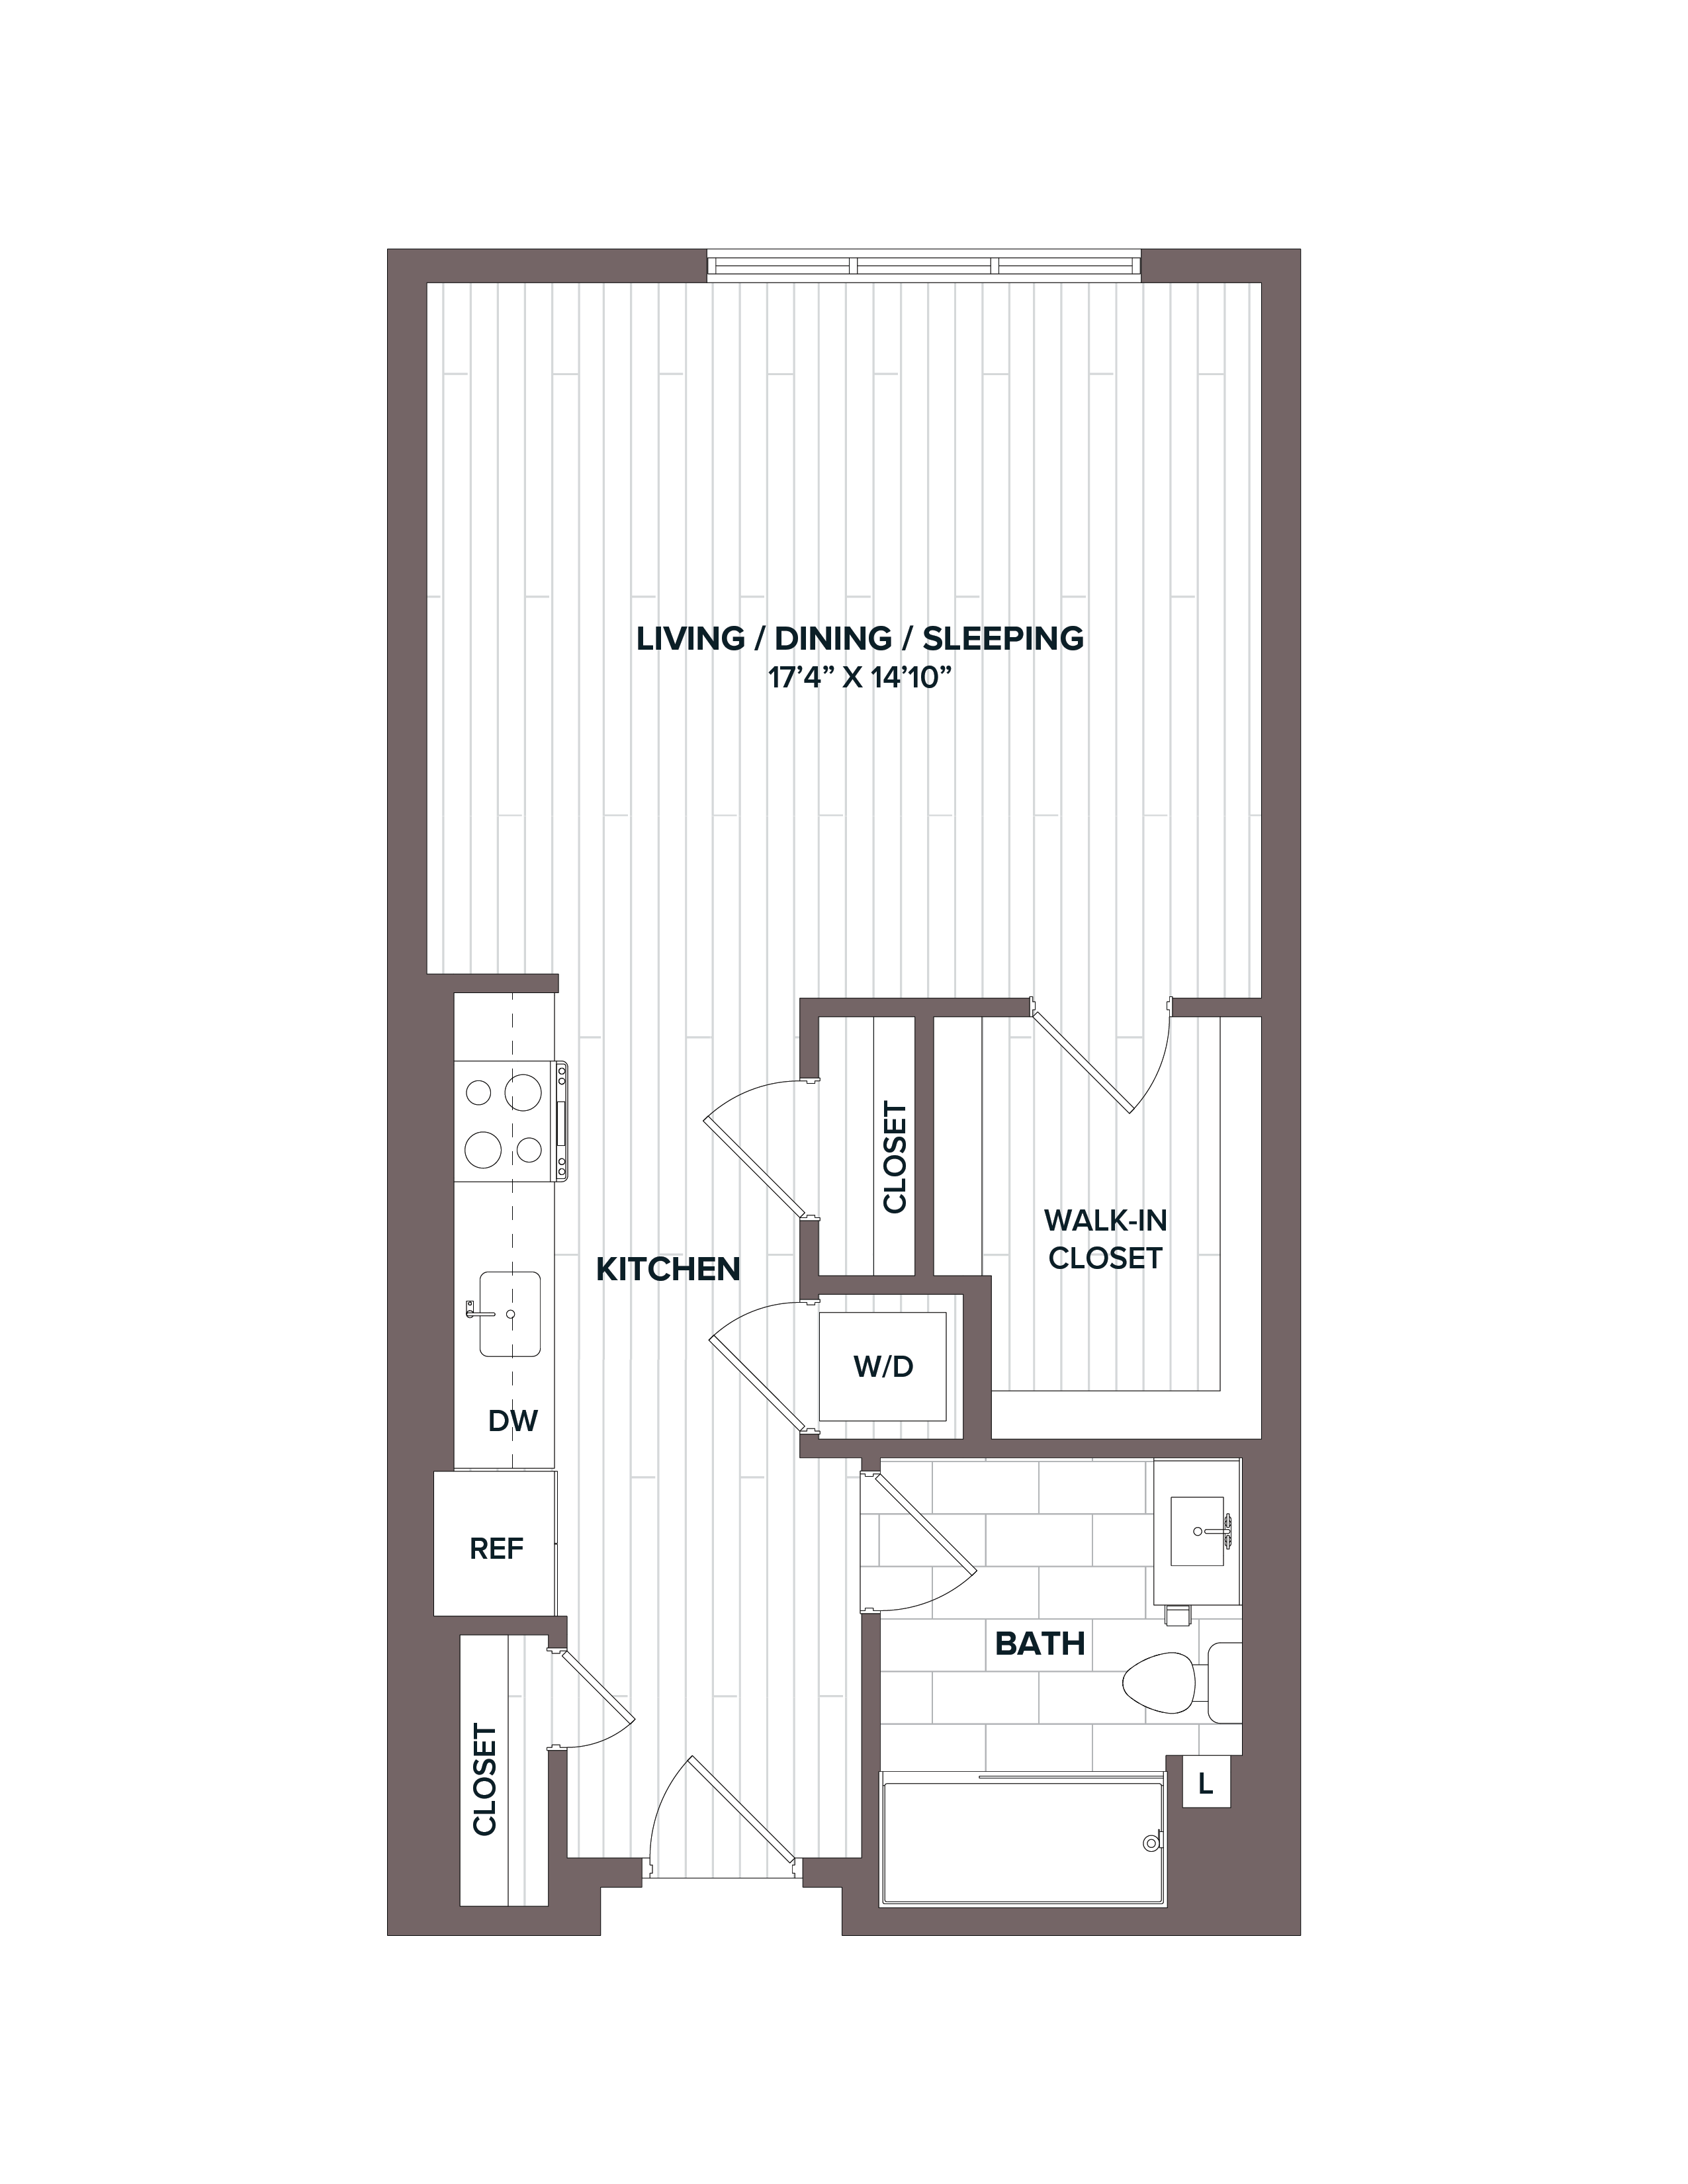 floorplan image of apartment 524